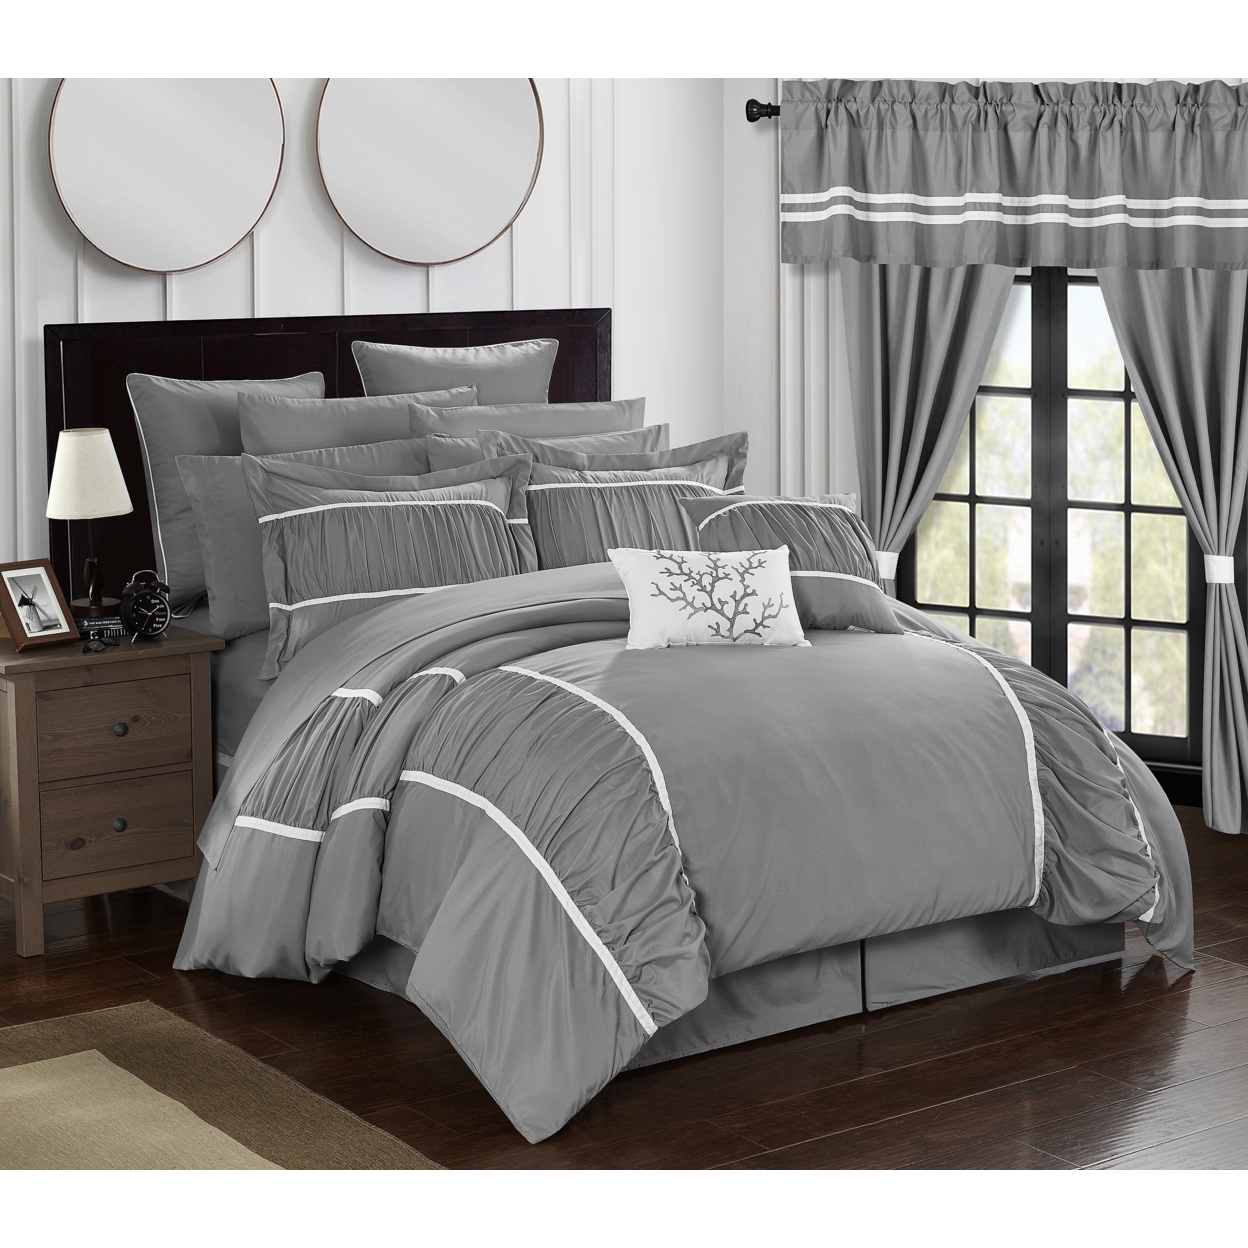 24 Piece Marian Complete Bedroom In A Bag Pinch Pleat Ruffled Designer Embellished Bed In A Bag Comforter Set - Grey, King